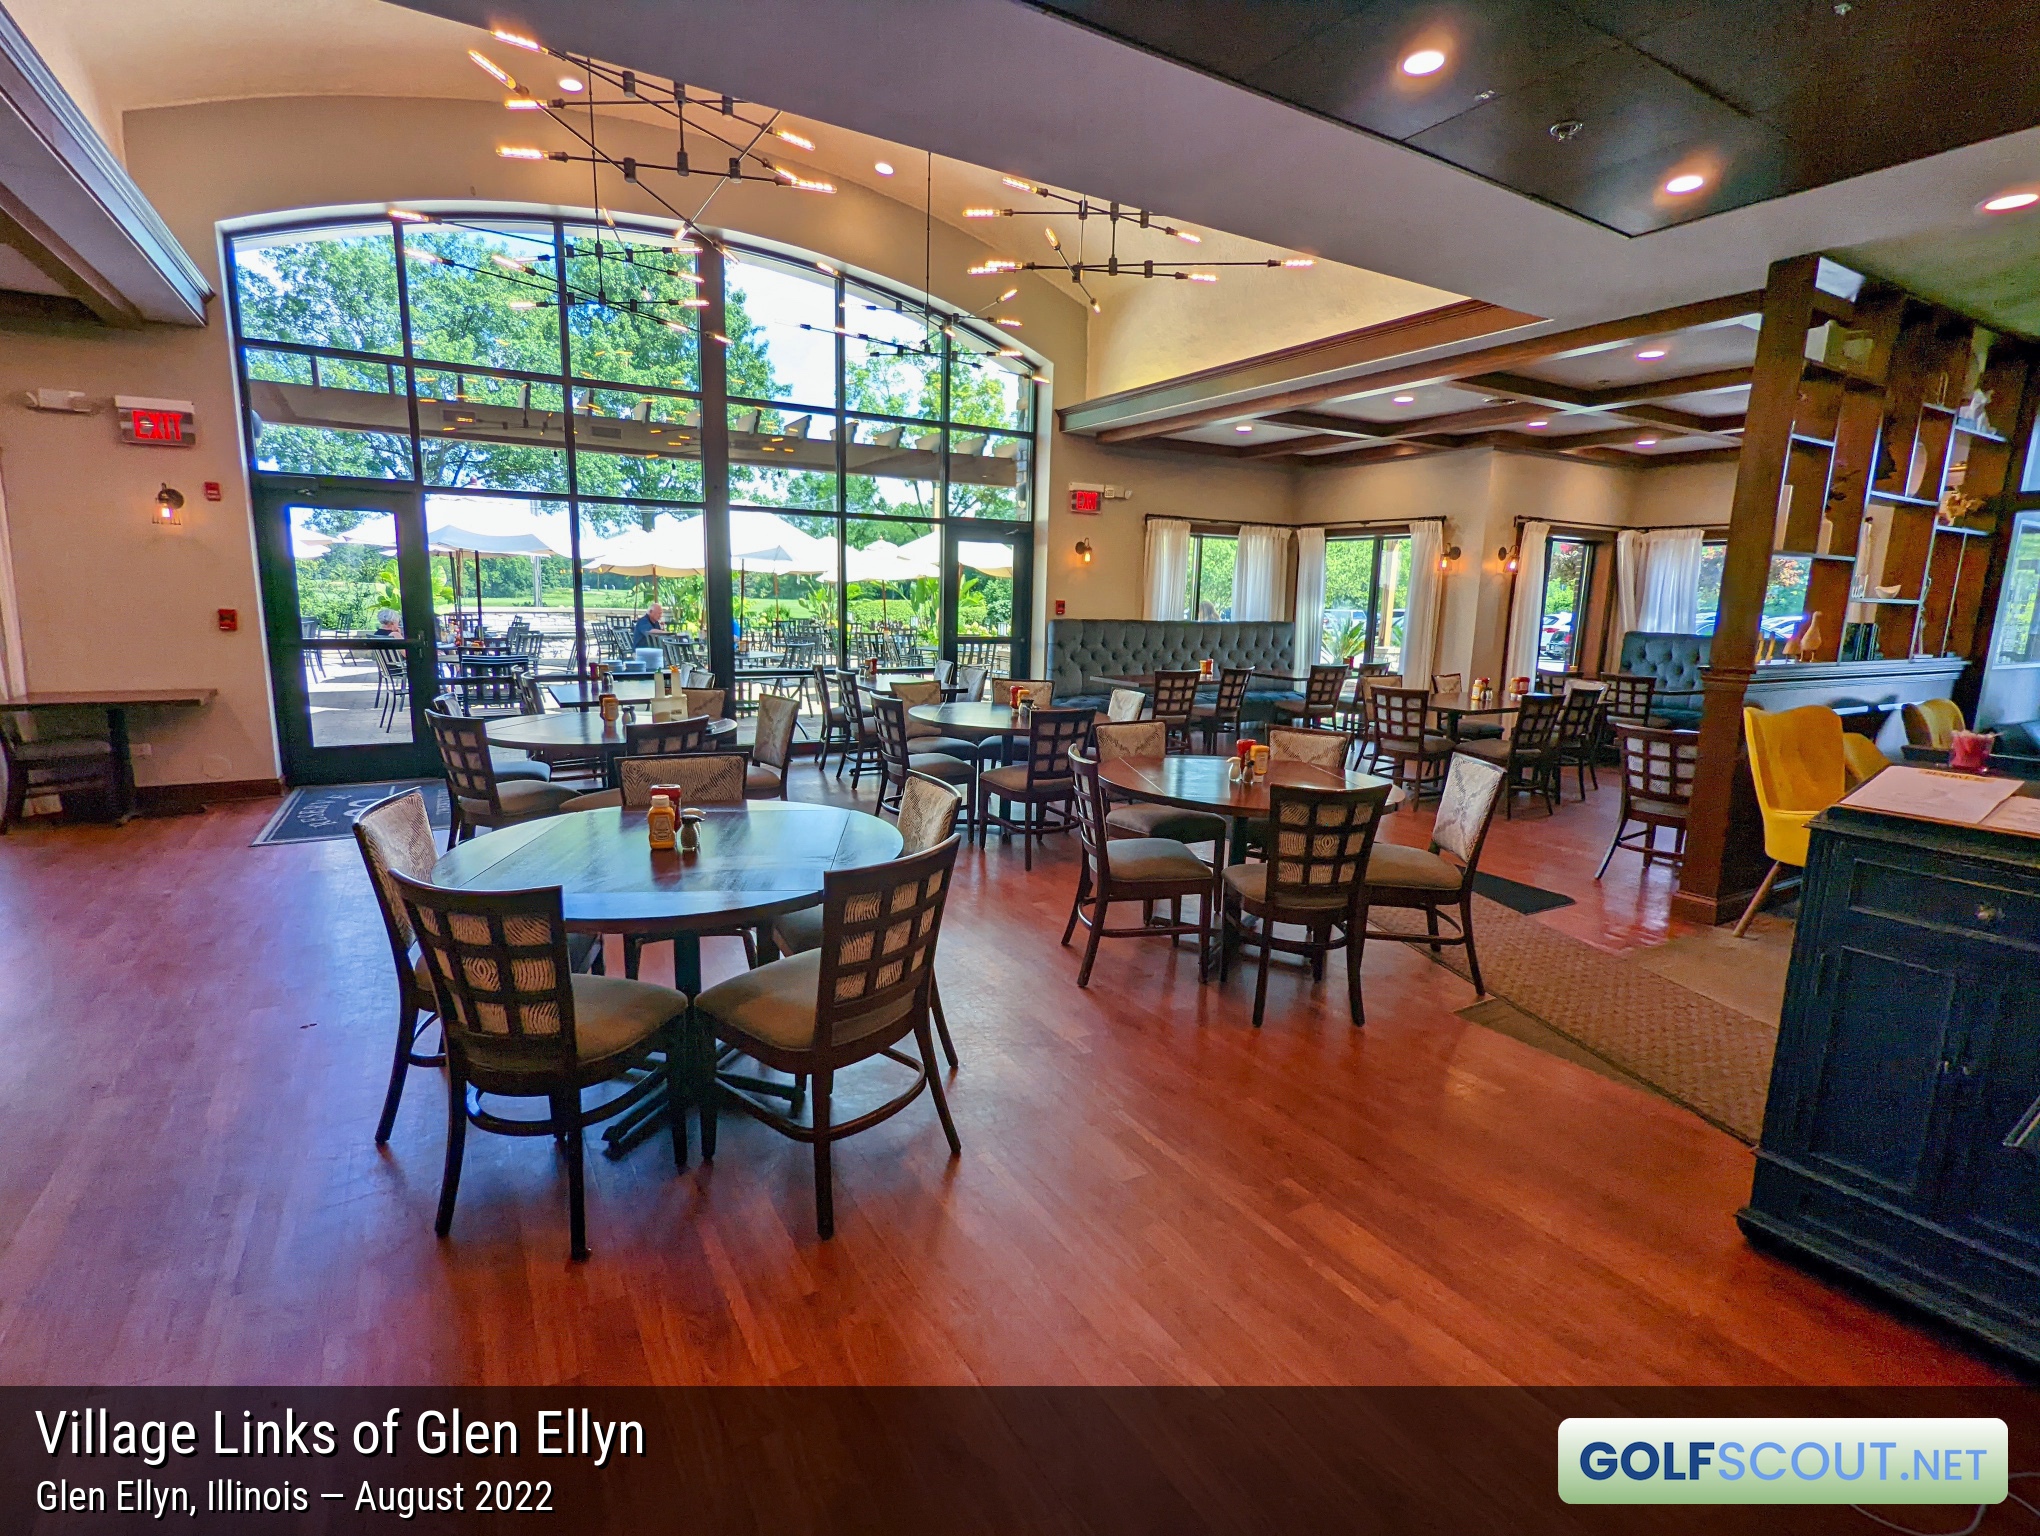 Photo of the restaurant at Village Links of Glen Ellyn - 9 Hole Course in Glen Ellyn, Illinois. 